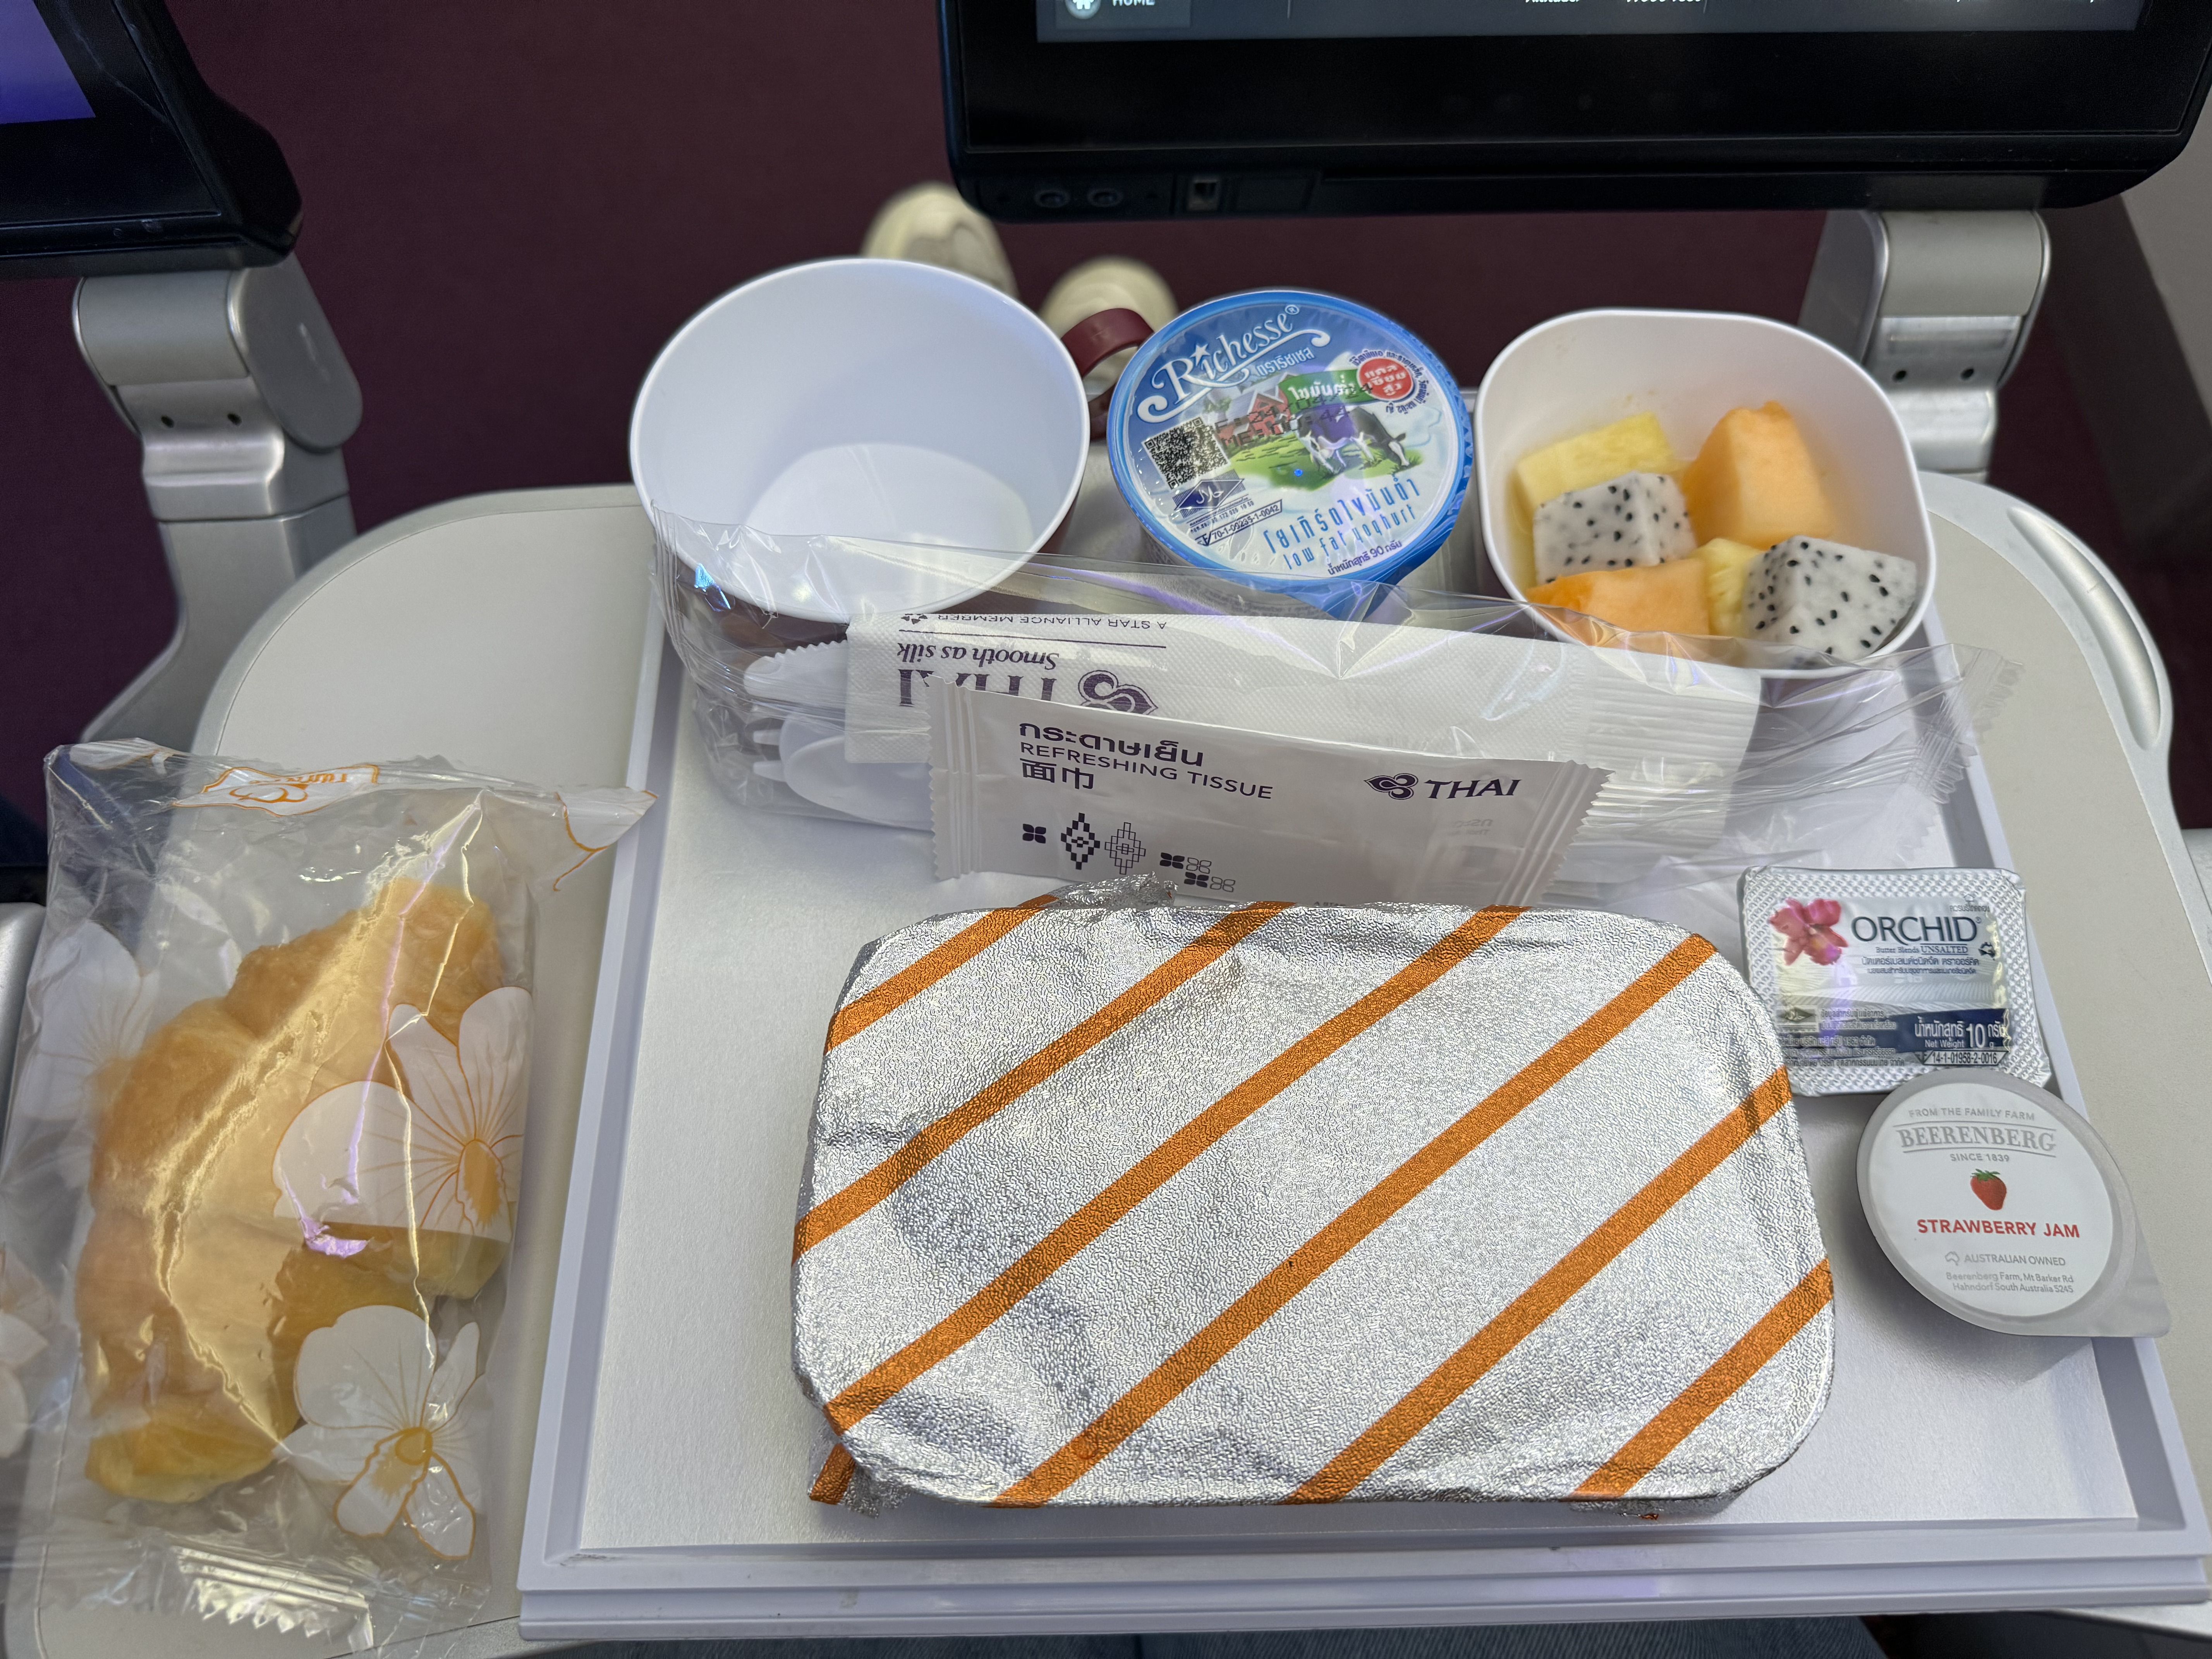 A Thai Airways economy class meal.